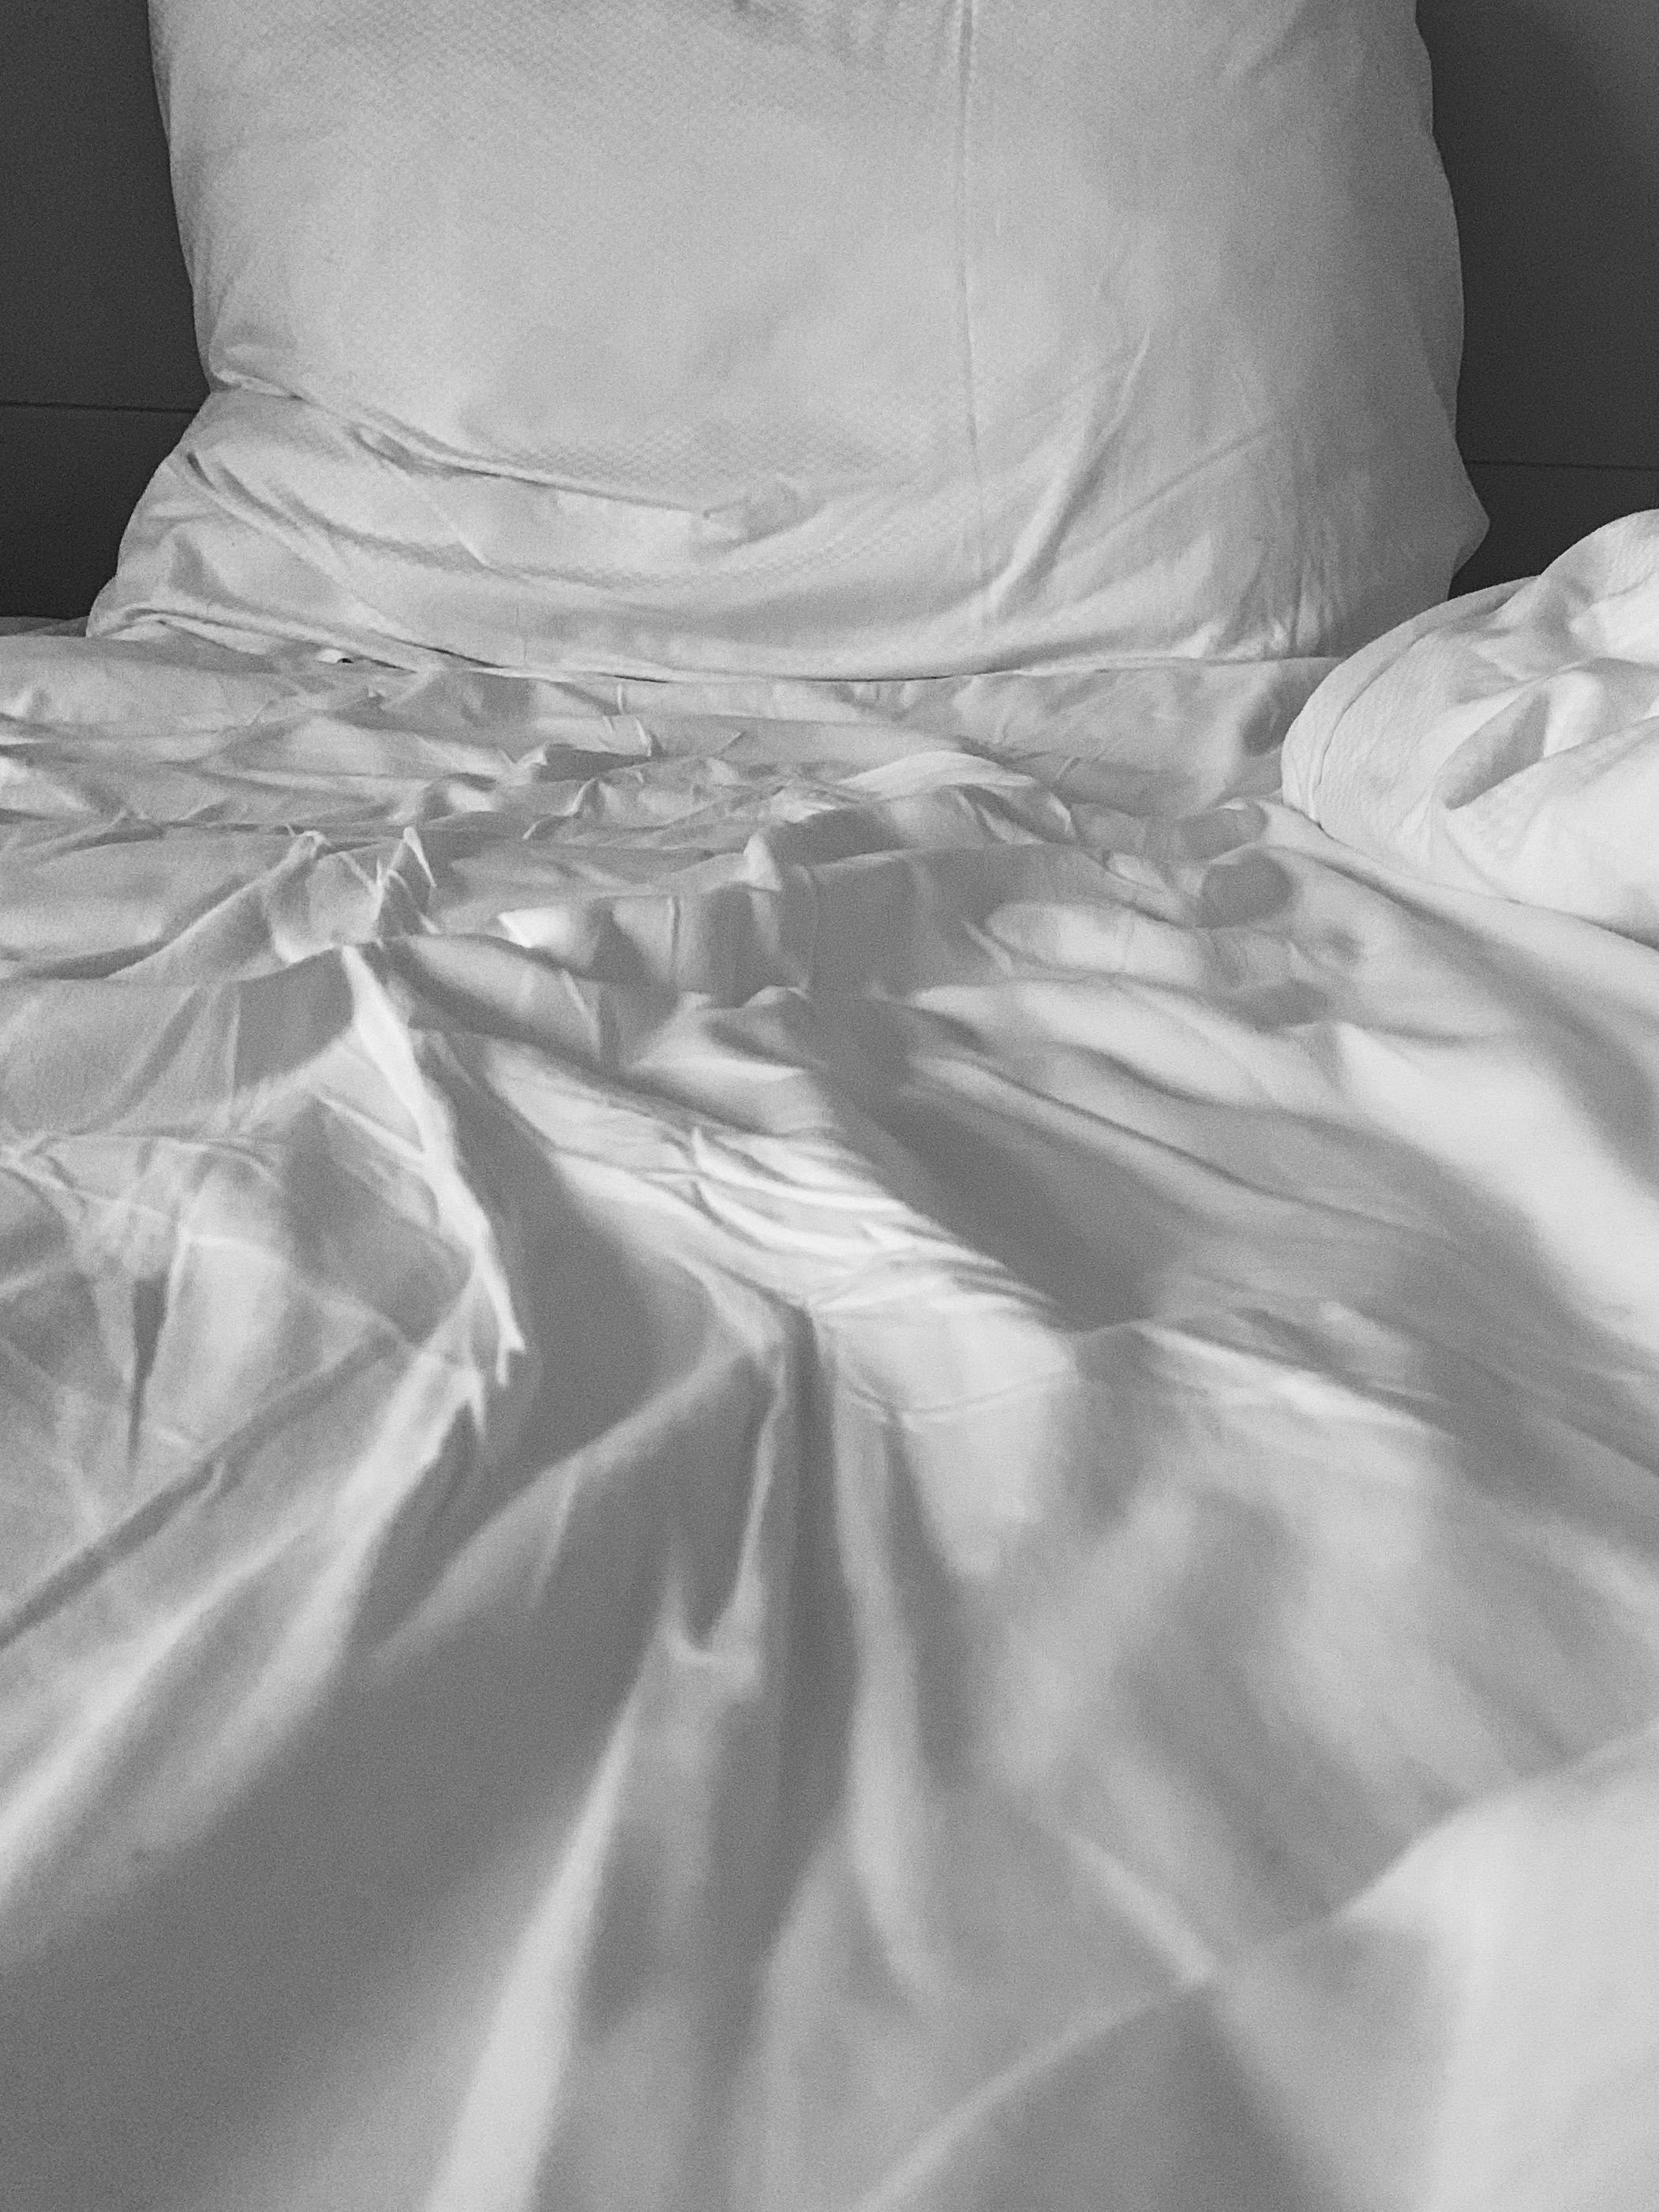 Ruffled White Bed · Free Stock Photo